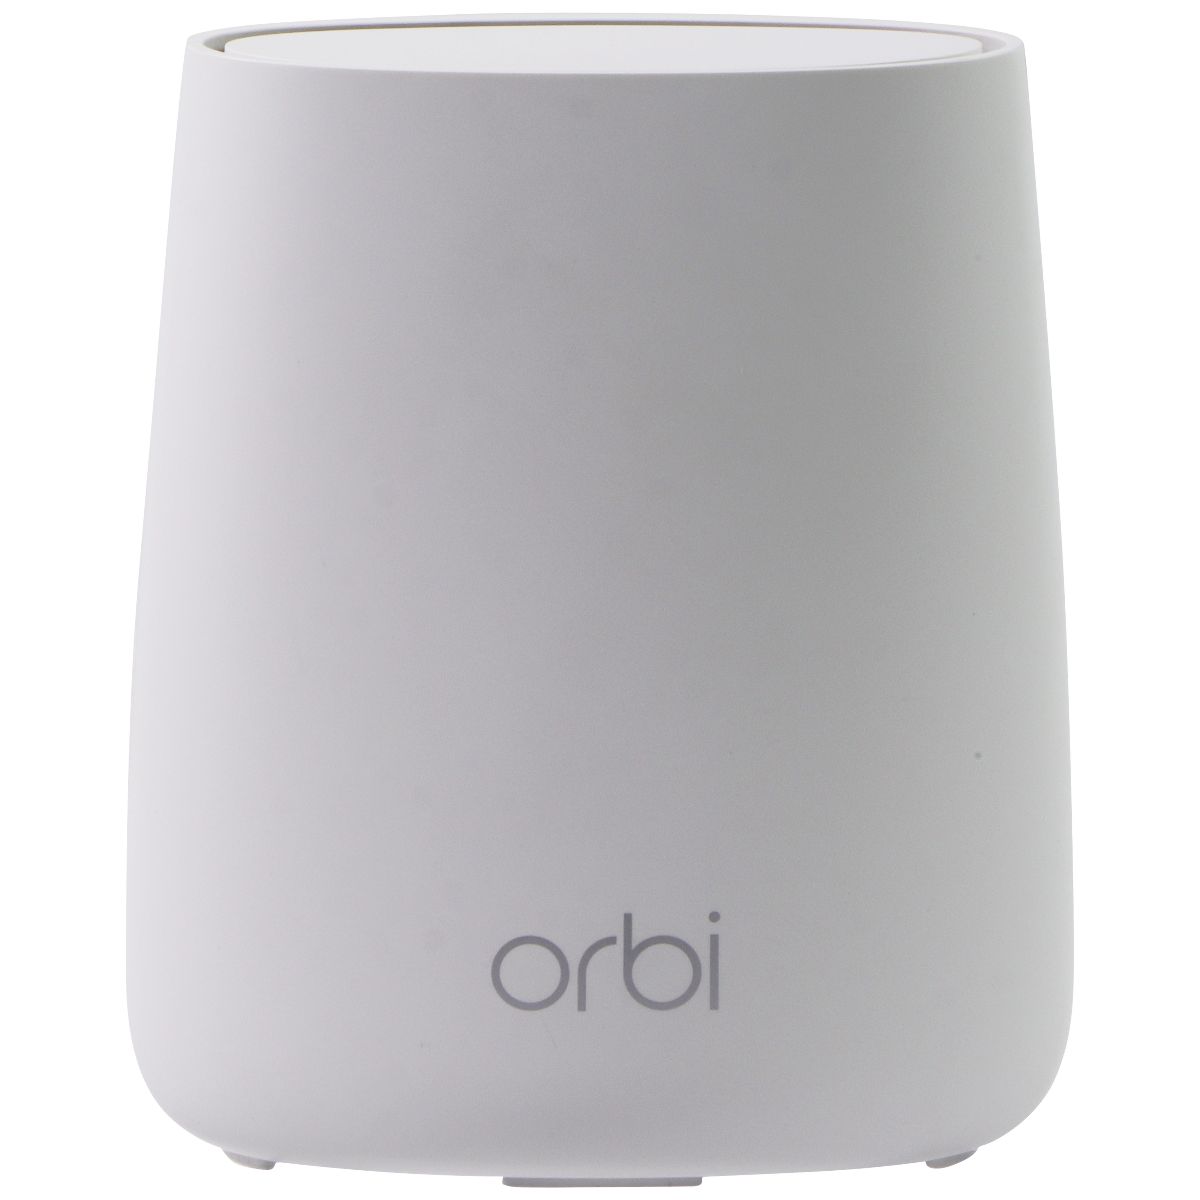 NetGear Orbi (RBK22-100NAS) Mini Home WiFi System - White (Satellite and Router)